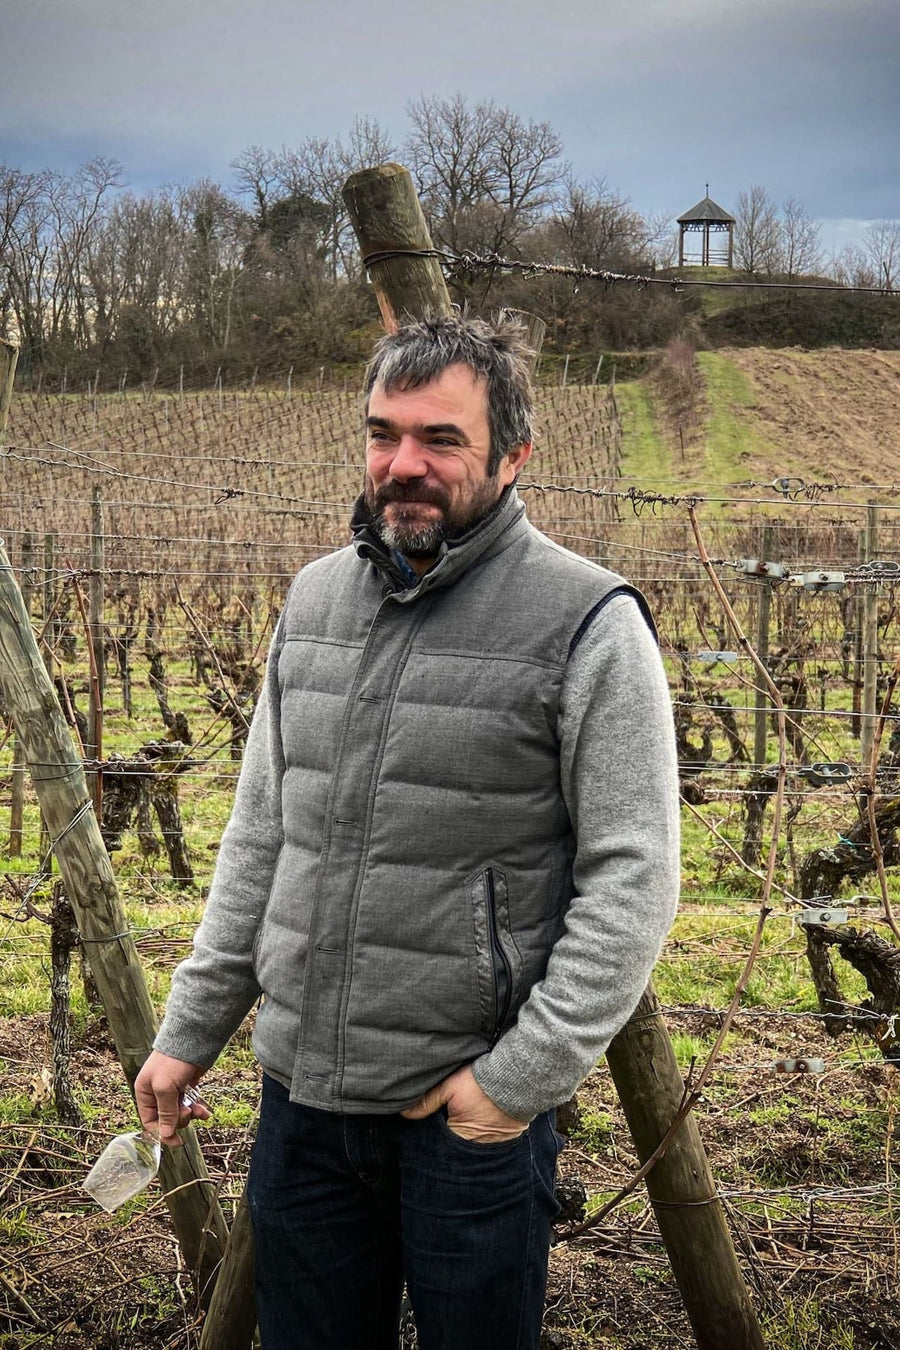 Domaine Rieffel - 'l'Emprise' - Chardonnay, Pinot Gris - Mittelbergheim, Alsace, FR - 2017 - 1500ml